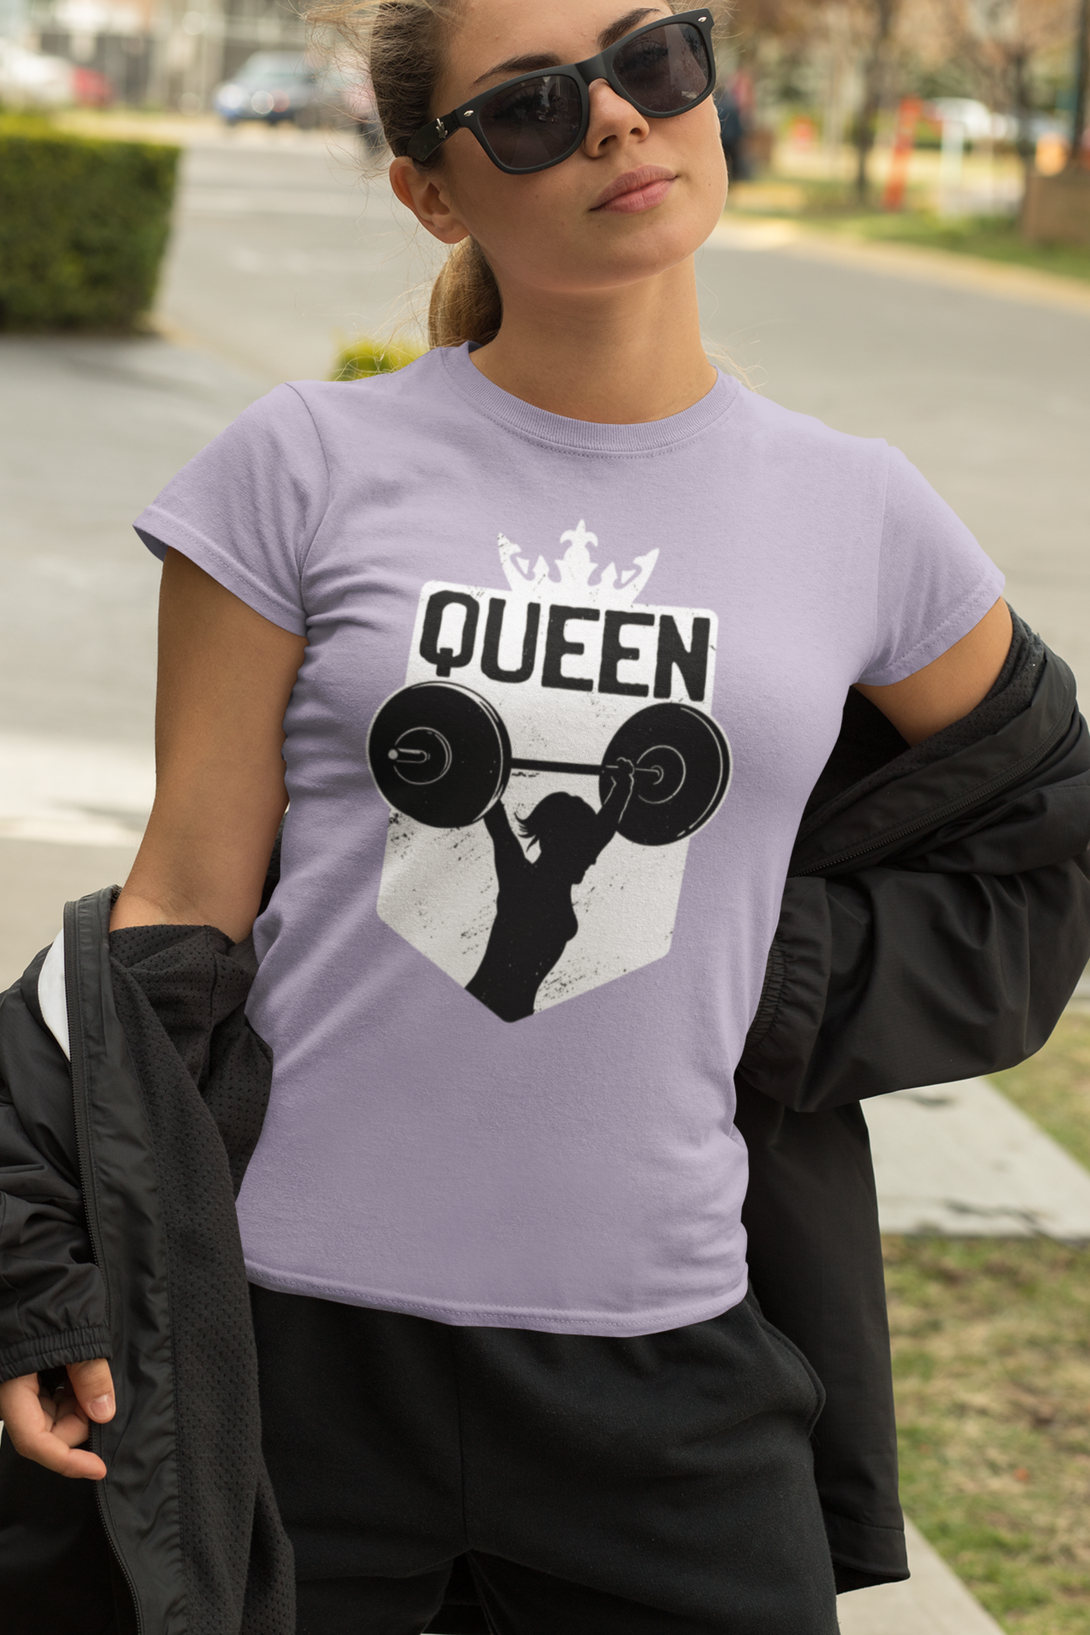 Queen Printed T-Shirt For Women - WowWaves - 6